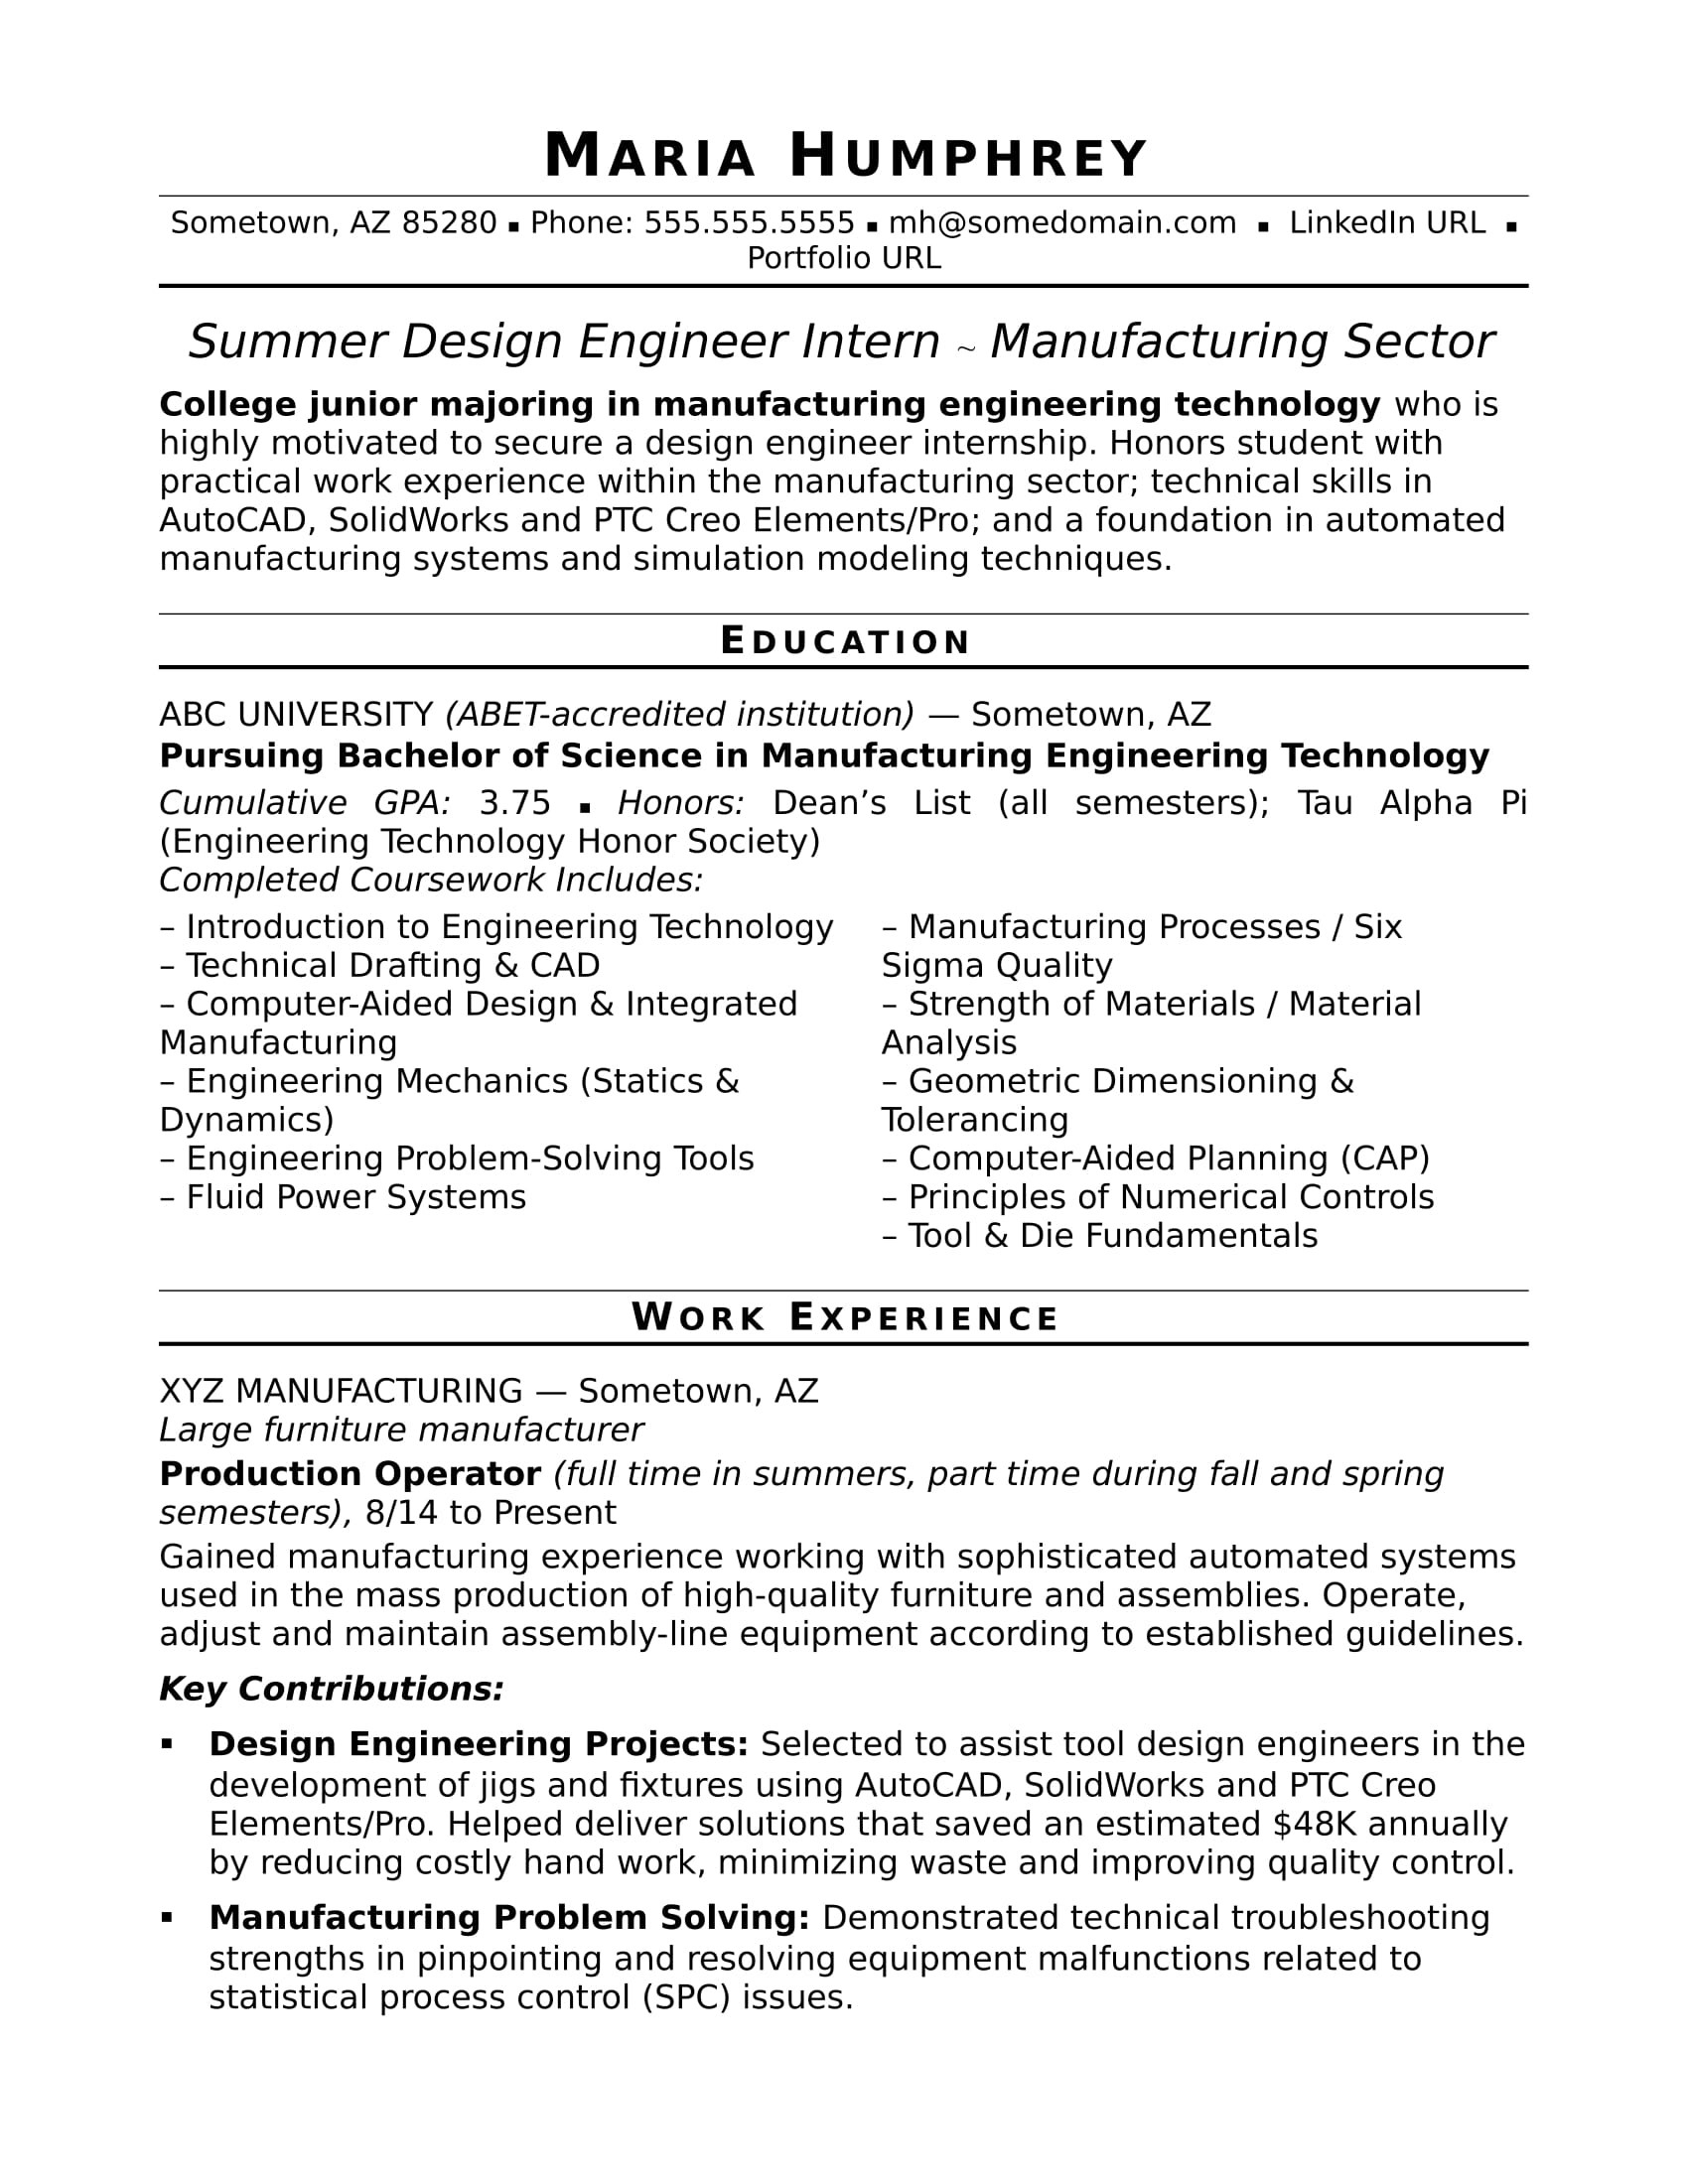 Sample Resume Engineer Out Of College Sample Resume for An Entry-level Design Engineer Monster.com